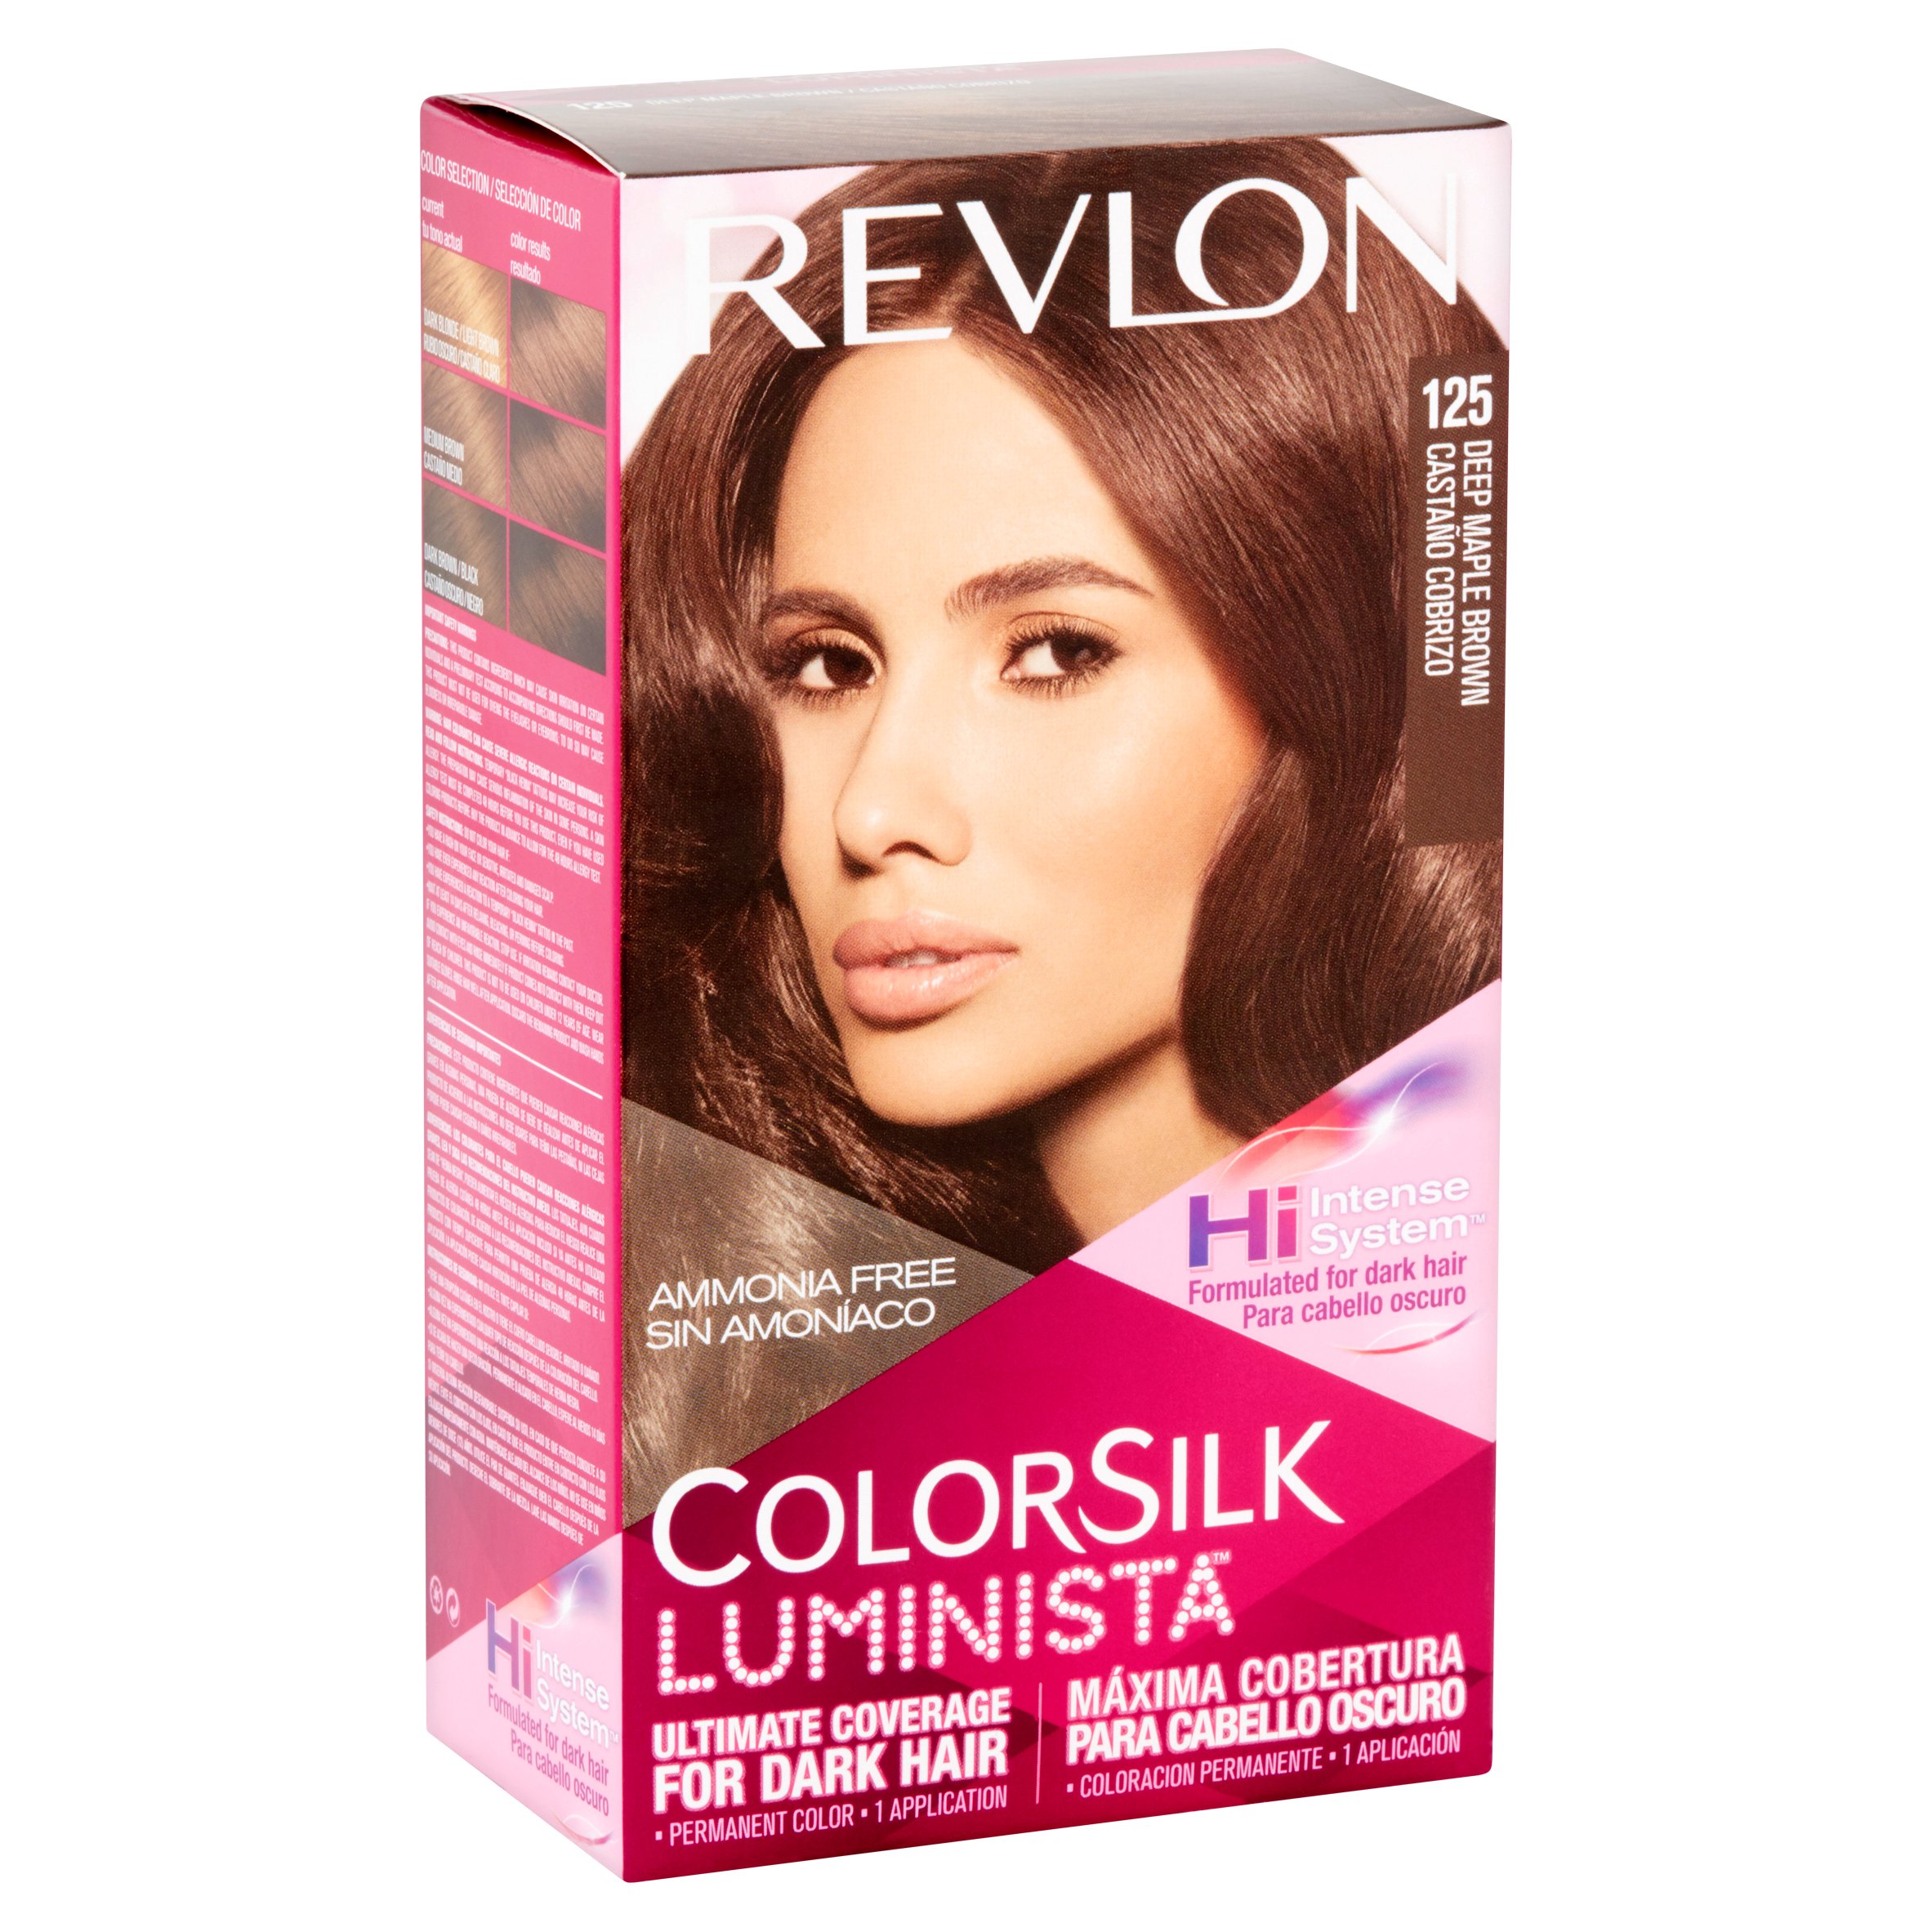 Revlon ColorSilk Luminista, Permanent Hair Color, 125 Deep Maple Brown - image 4 of 5